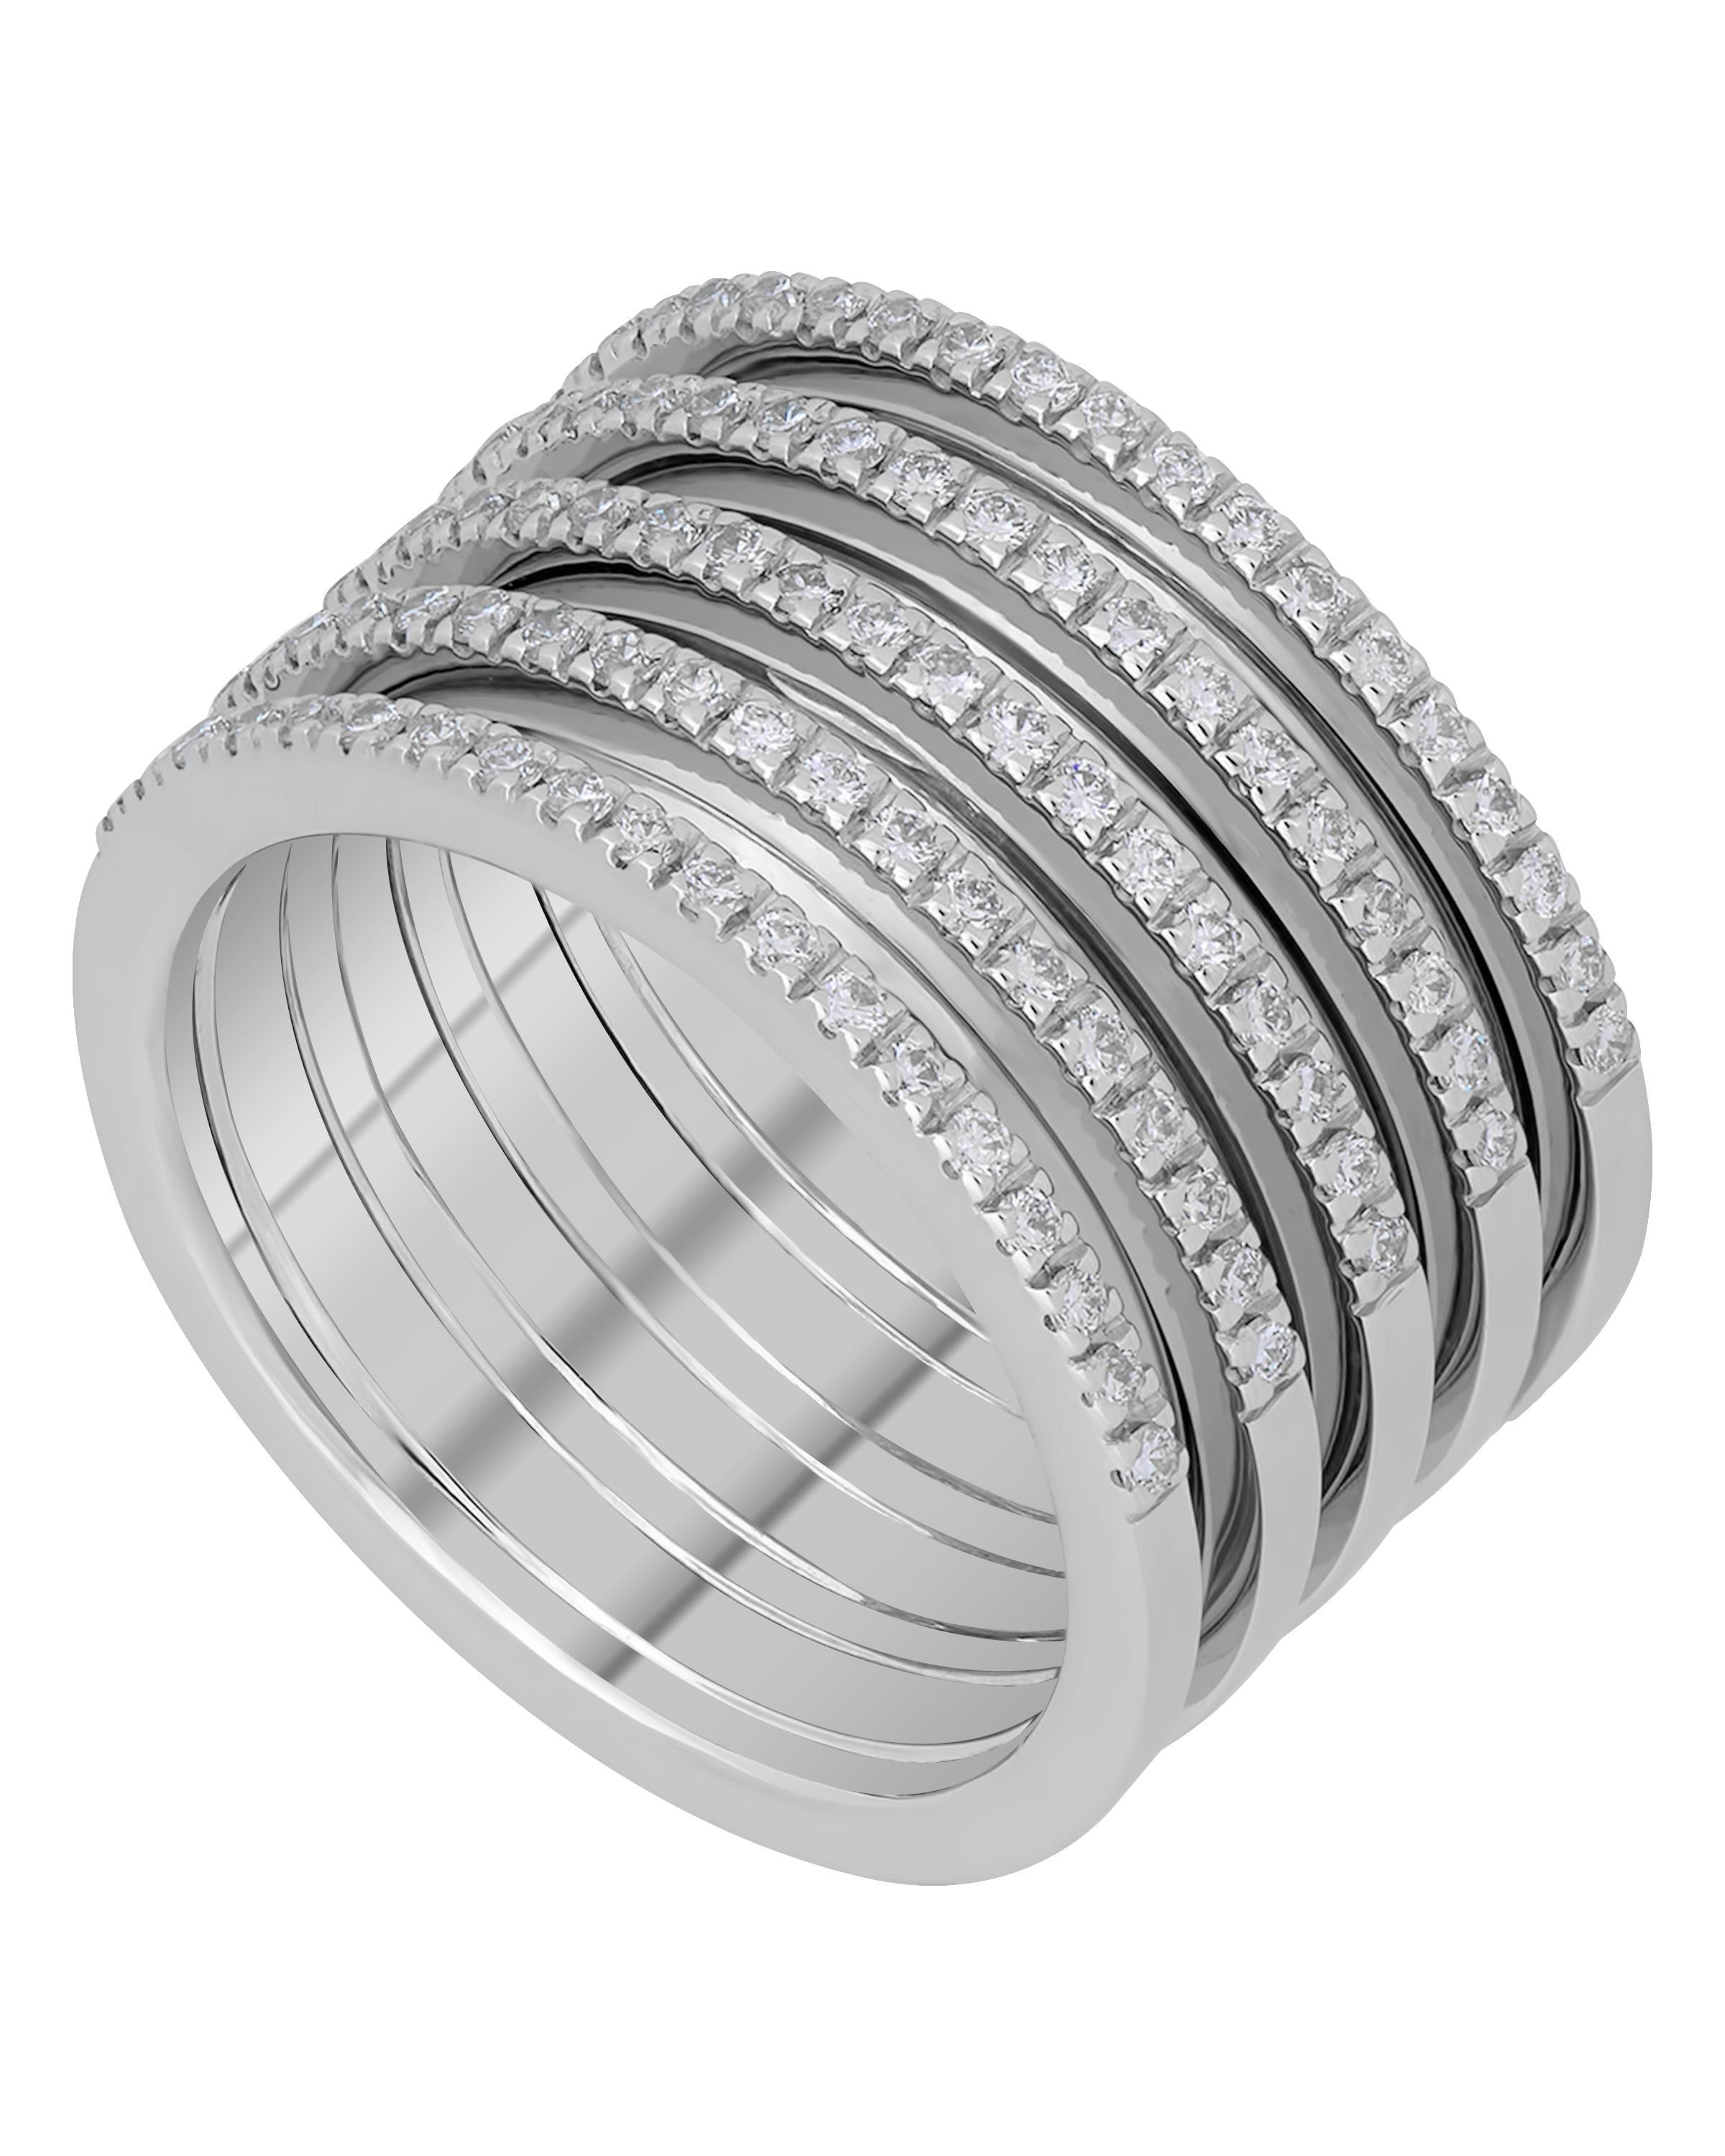 Contemporary SALVINI 18K White Gold, Diamond Band Ring sz 7.5 For Sale